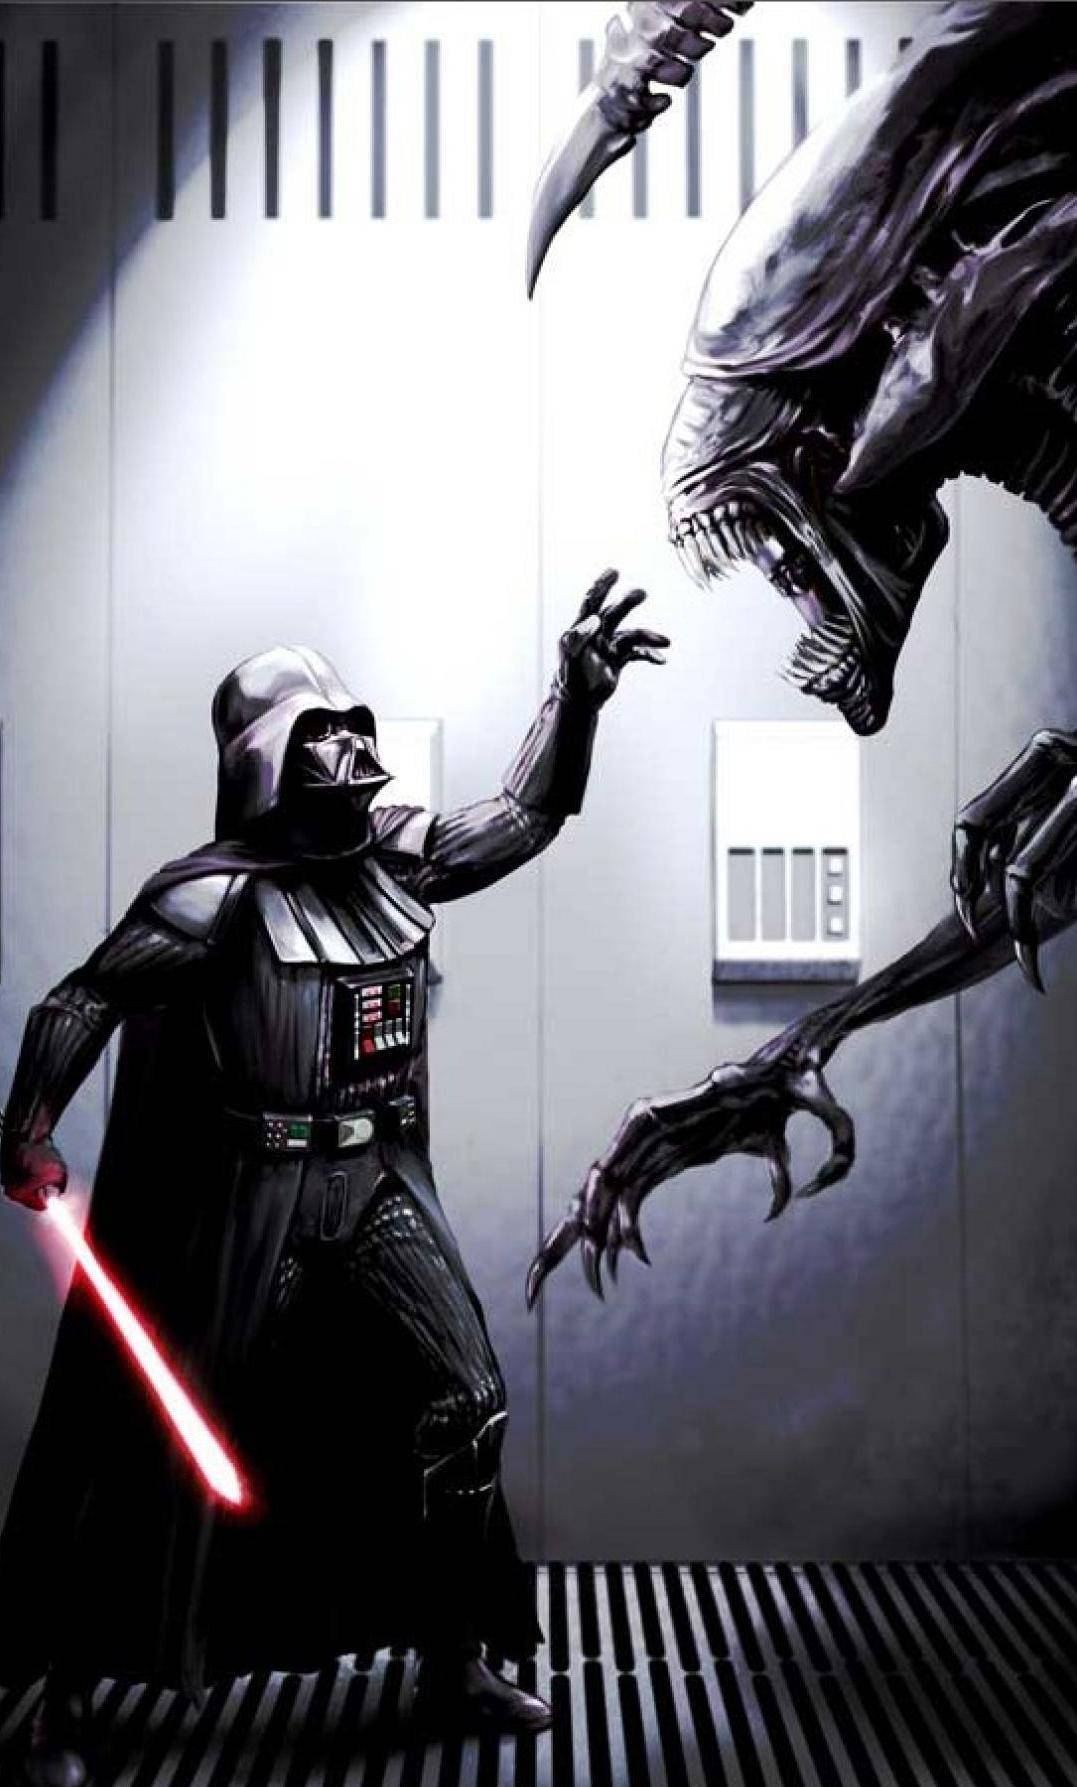 Alien Versus Darth Vader From Star Wars Cell Phone